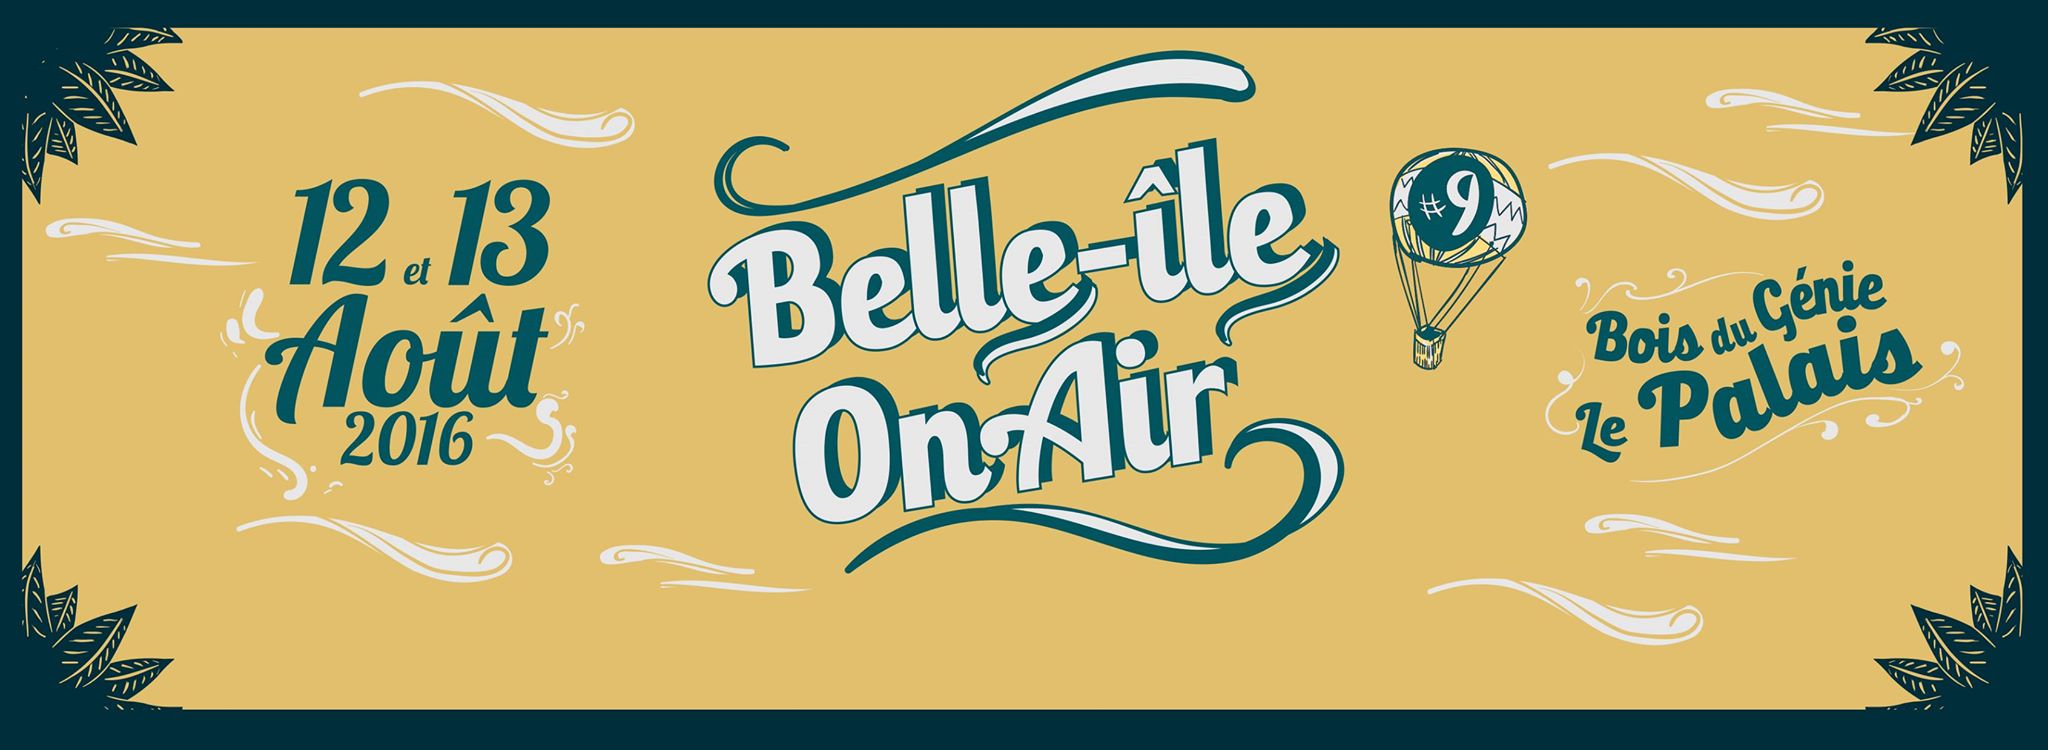 Festival Belle Ile On Air #9